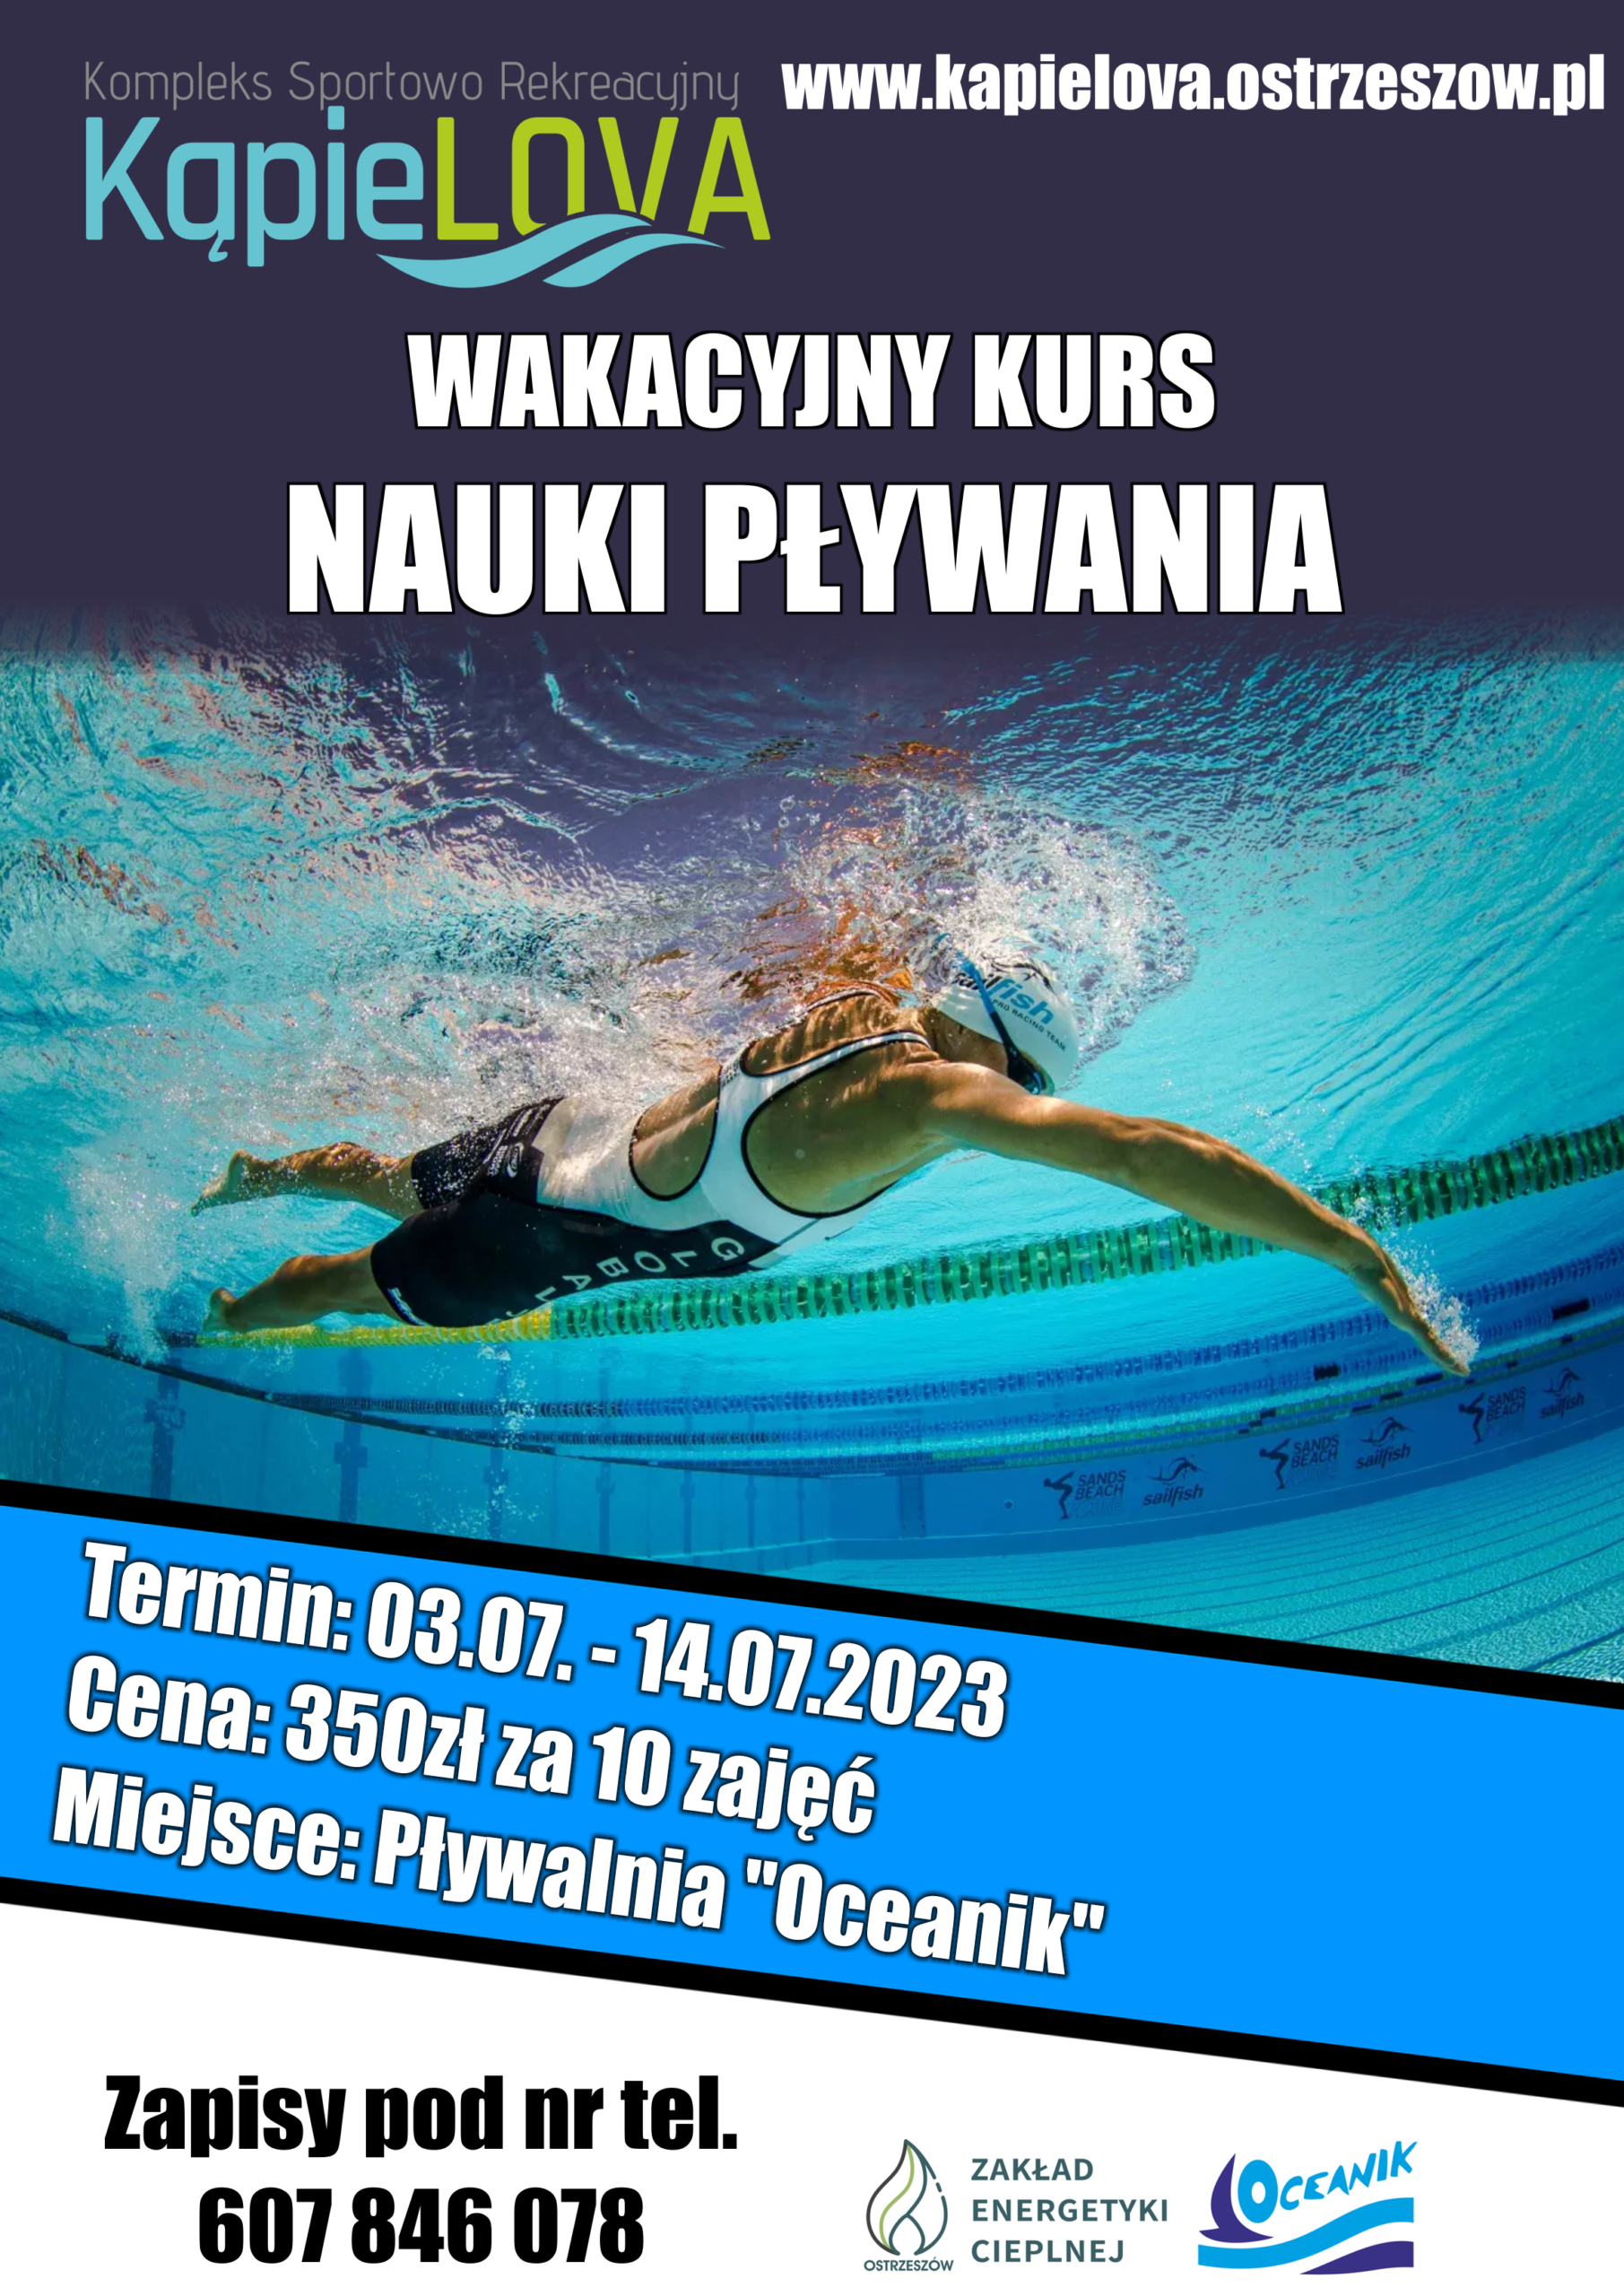 You are currently viewing Wakacyjny kurs nauki pływania